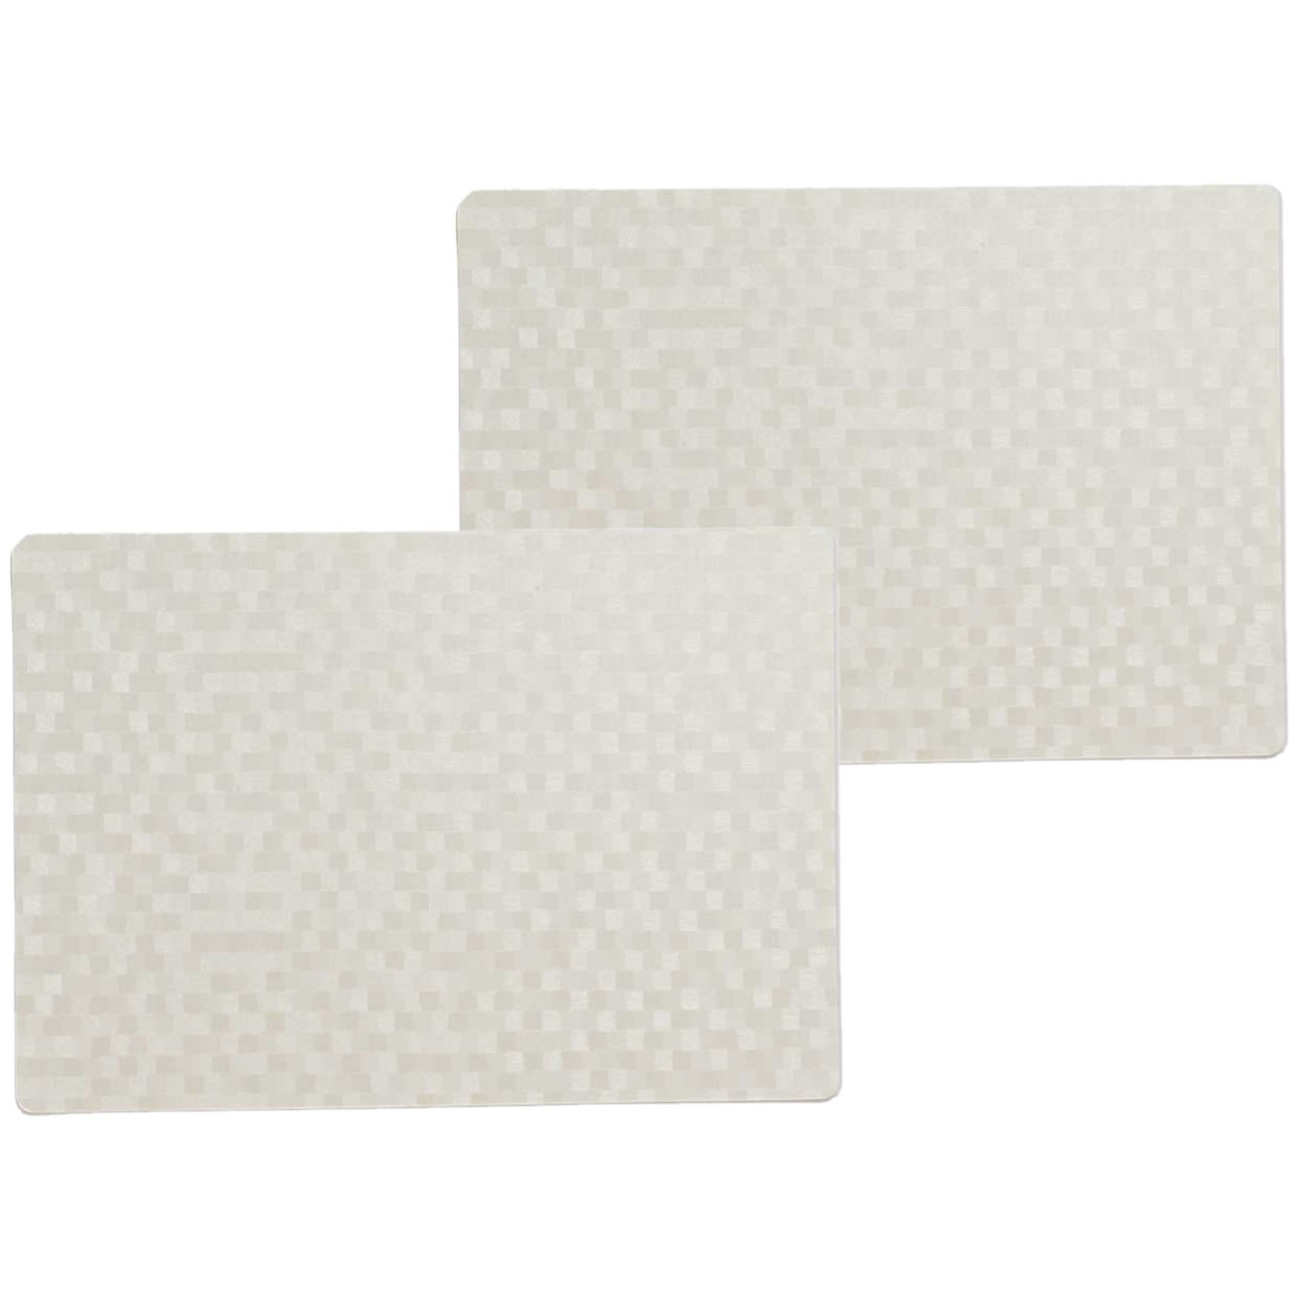 Wicotex 12x stuks stevige luxe Tafel placemats Stones wit 30 x 43 cm -